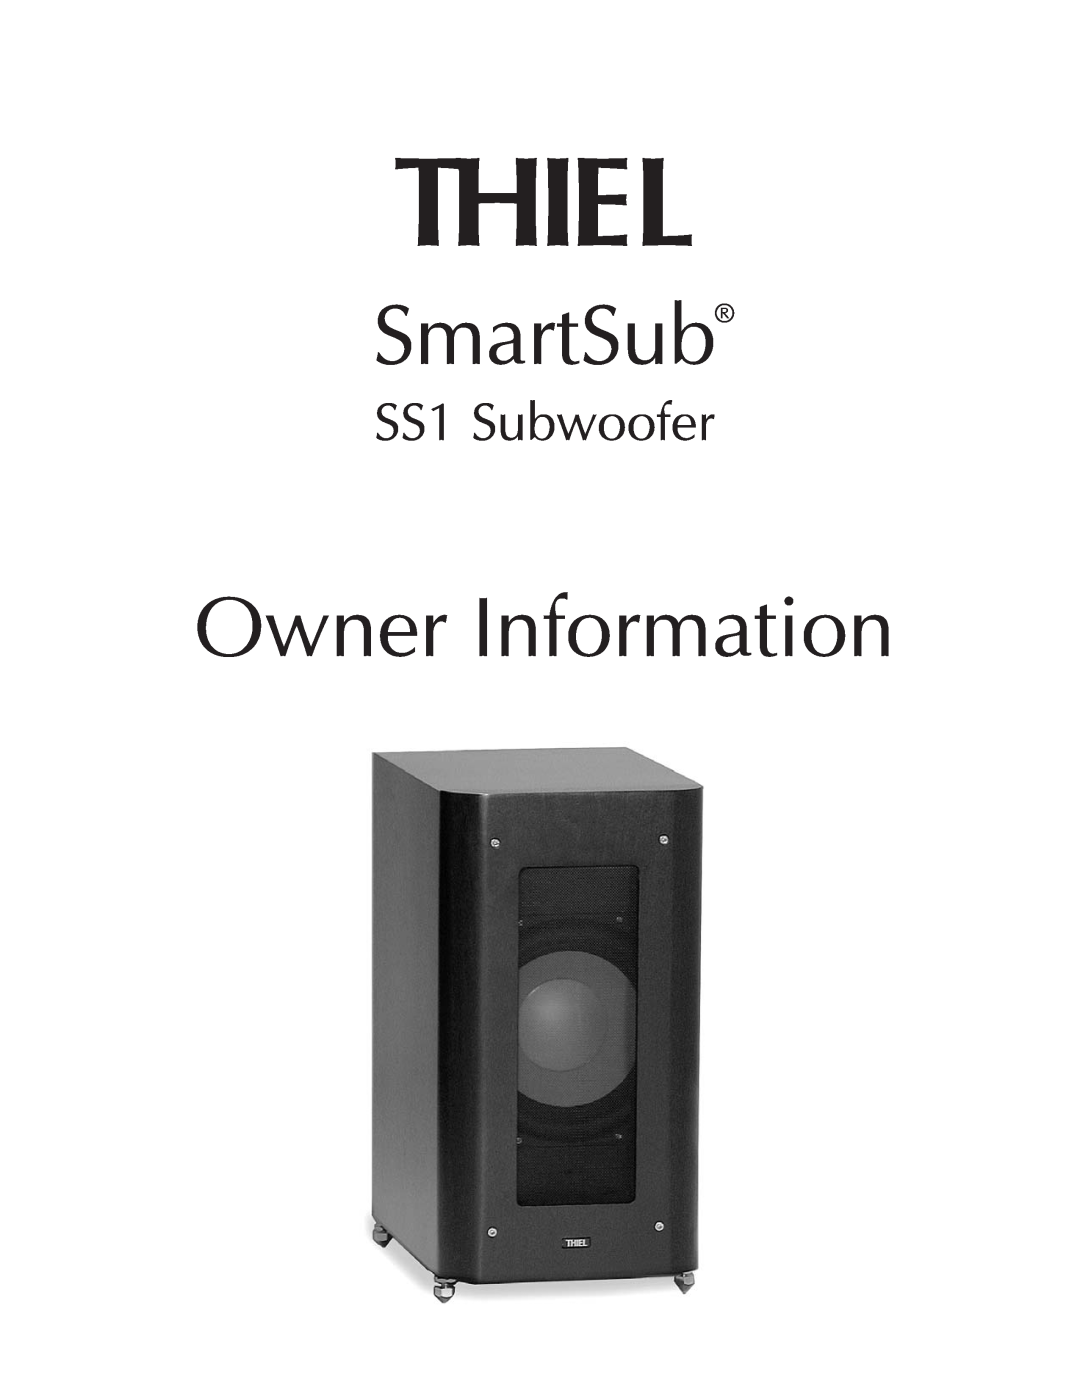 Thiel Audio Products SS1 Subwoofer manual Thiel, SmartSub, Owner Information 